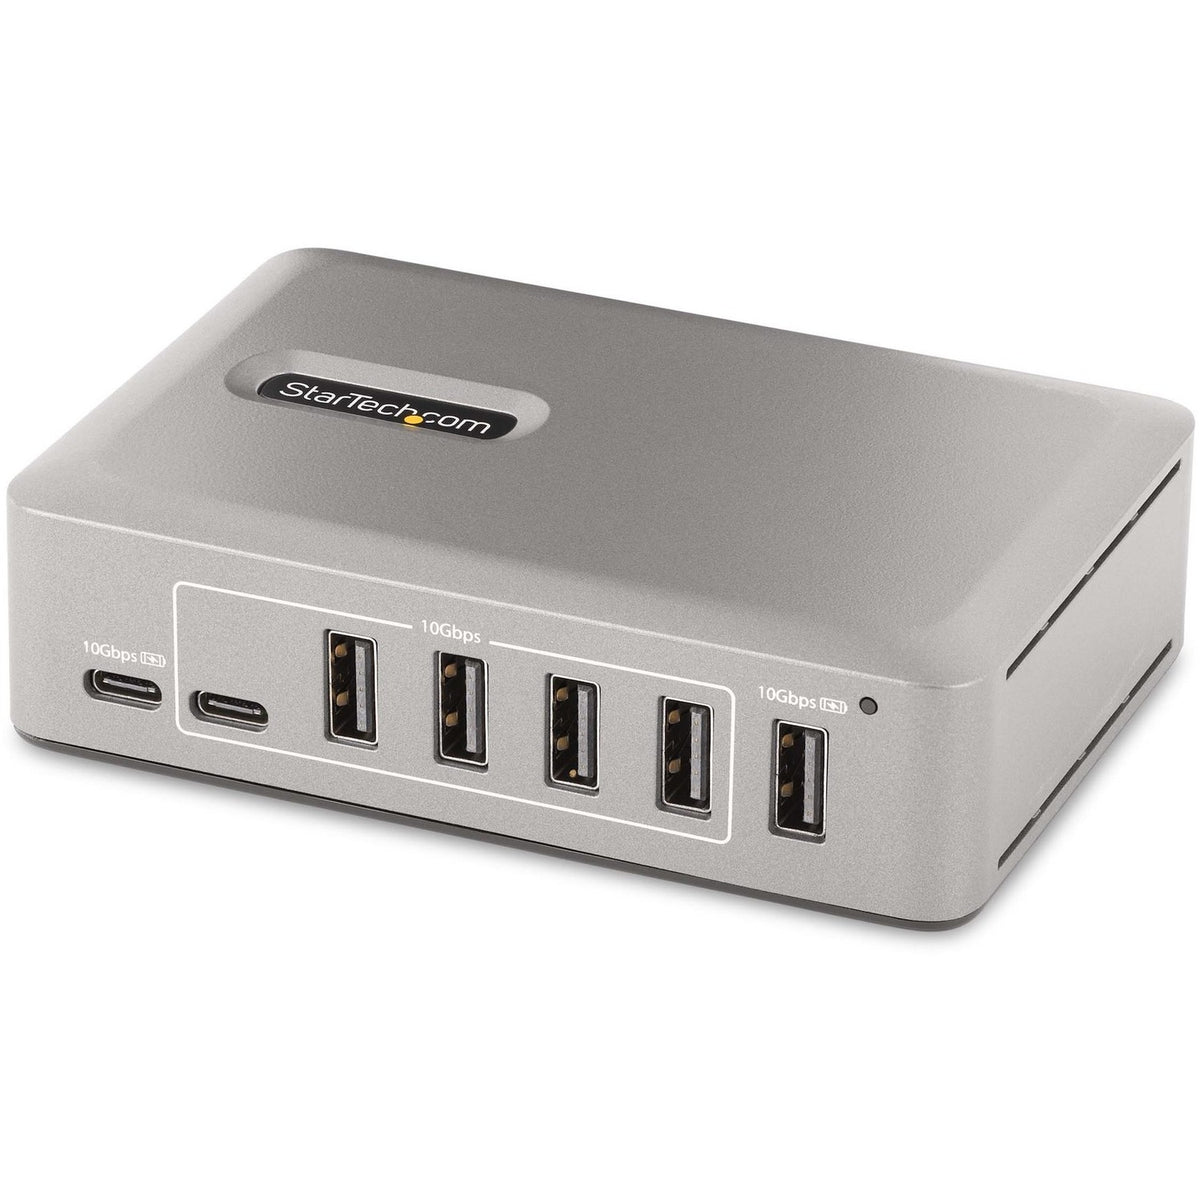 StarTech.com 10-Port USB-C Hub, 8x USB-A + 2x USB-C, Self-Powered w/ 65W Power Supply, USB 3.1 10Gbps Desktop/Laptop USB Hub w/ Charging - 10G8A2CS-USB-C-HUB